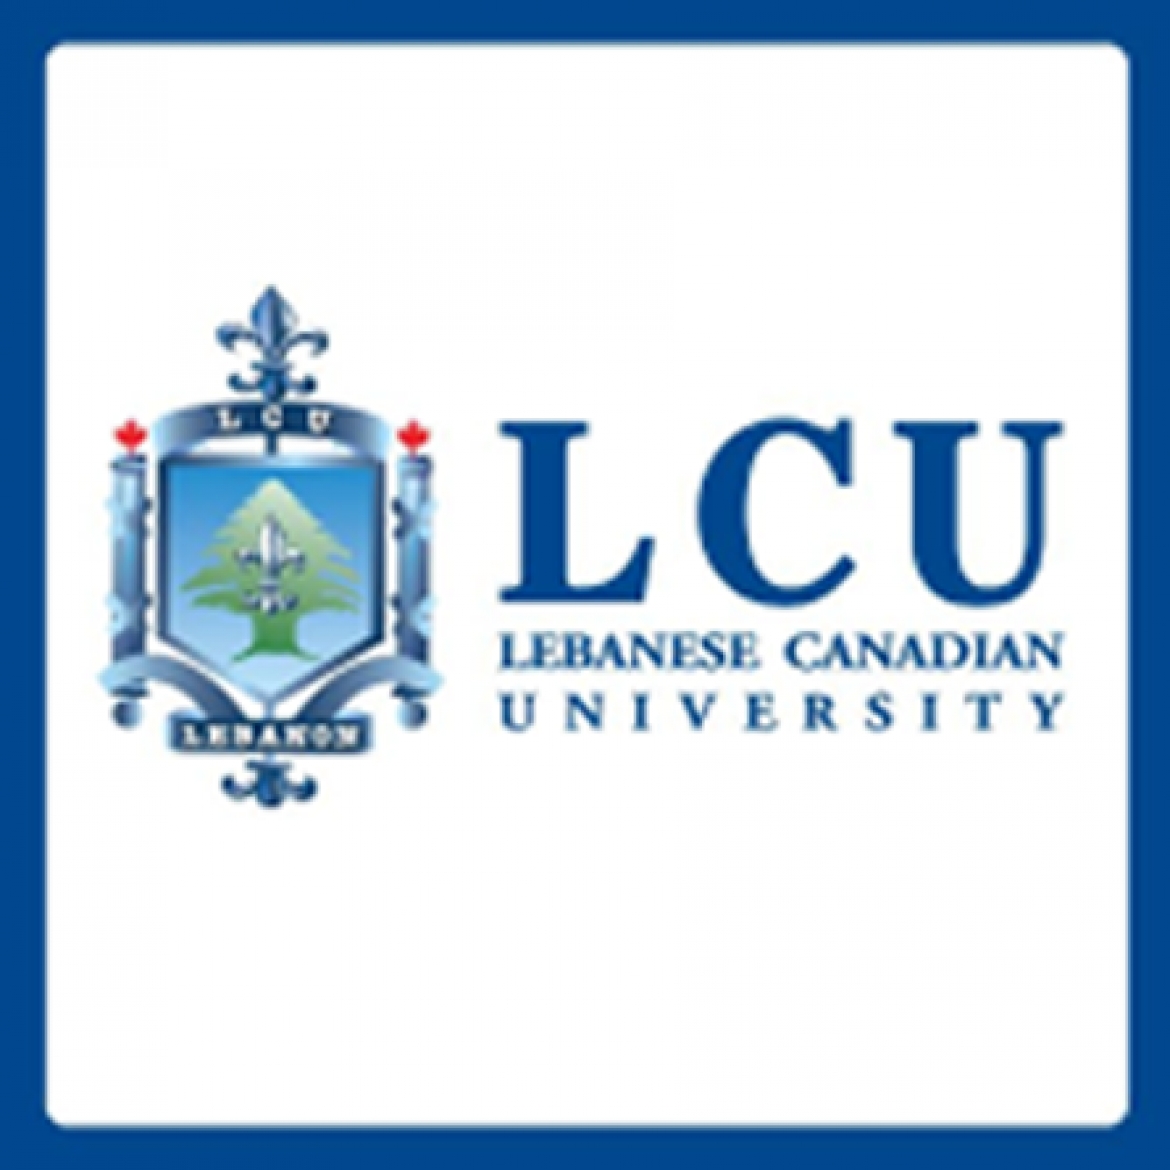 Lebanese Canadian university,LCU